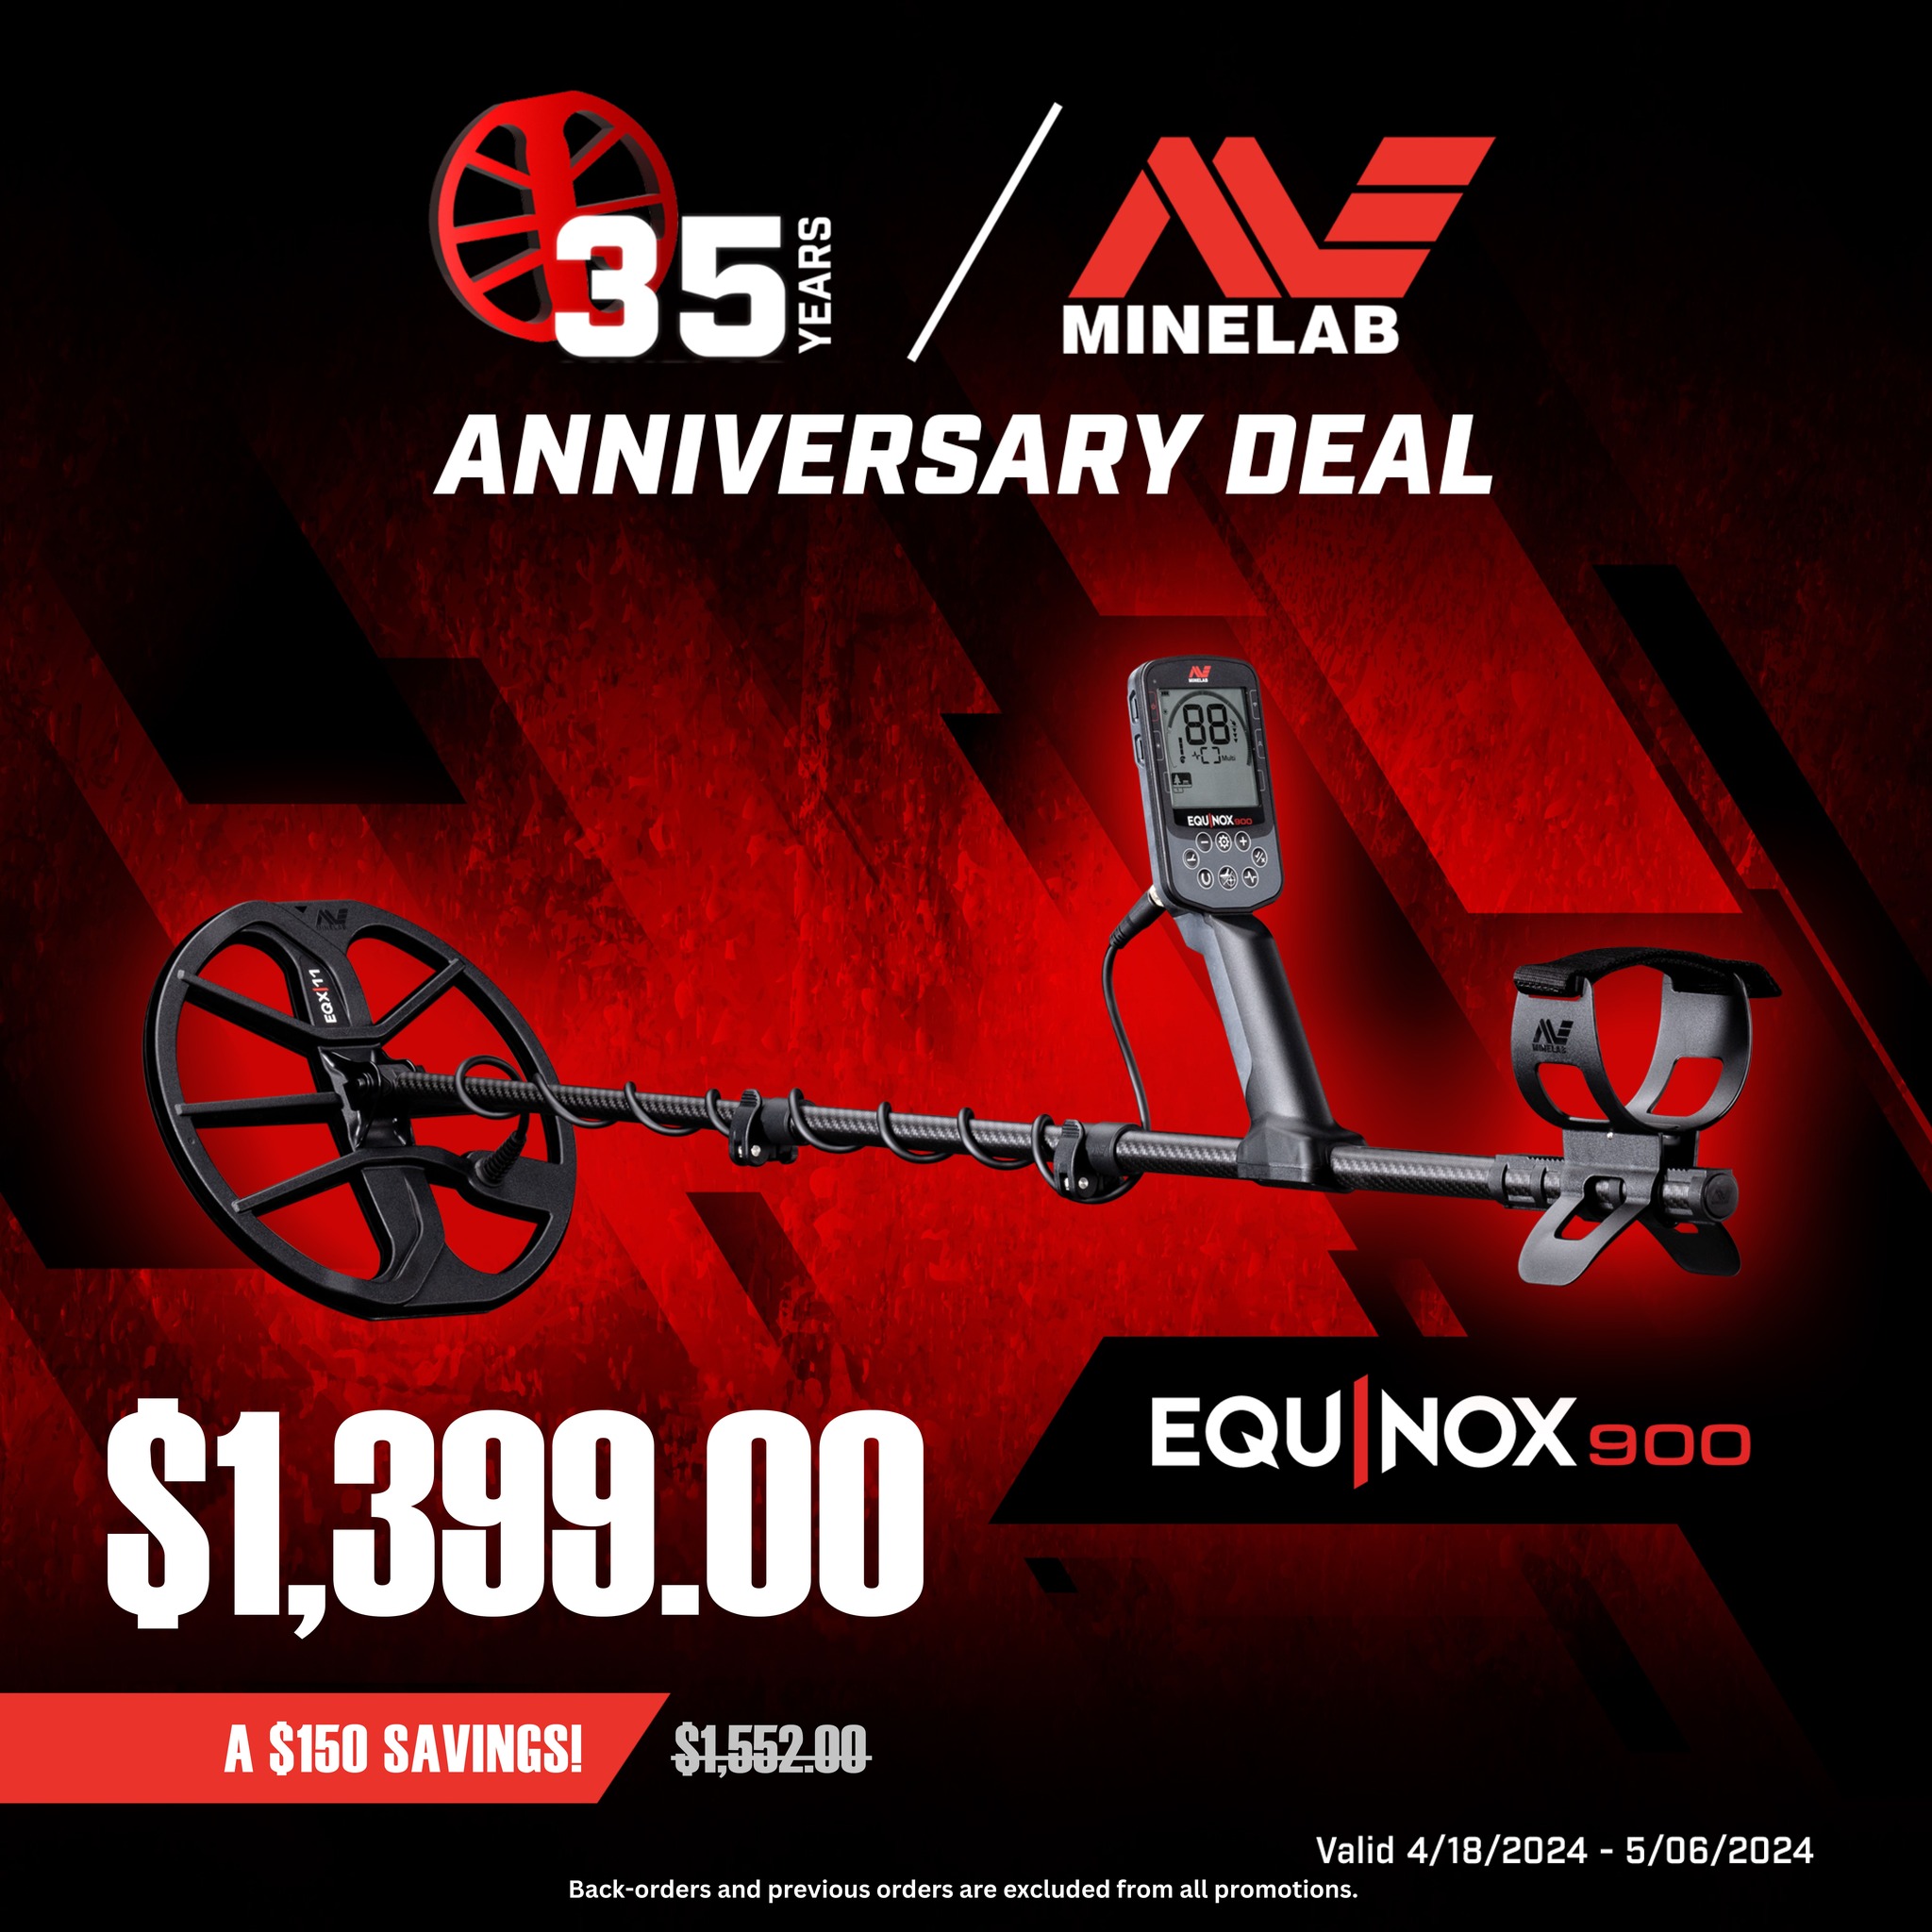 Equinox 900 Sale